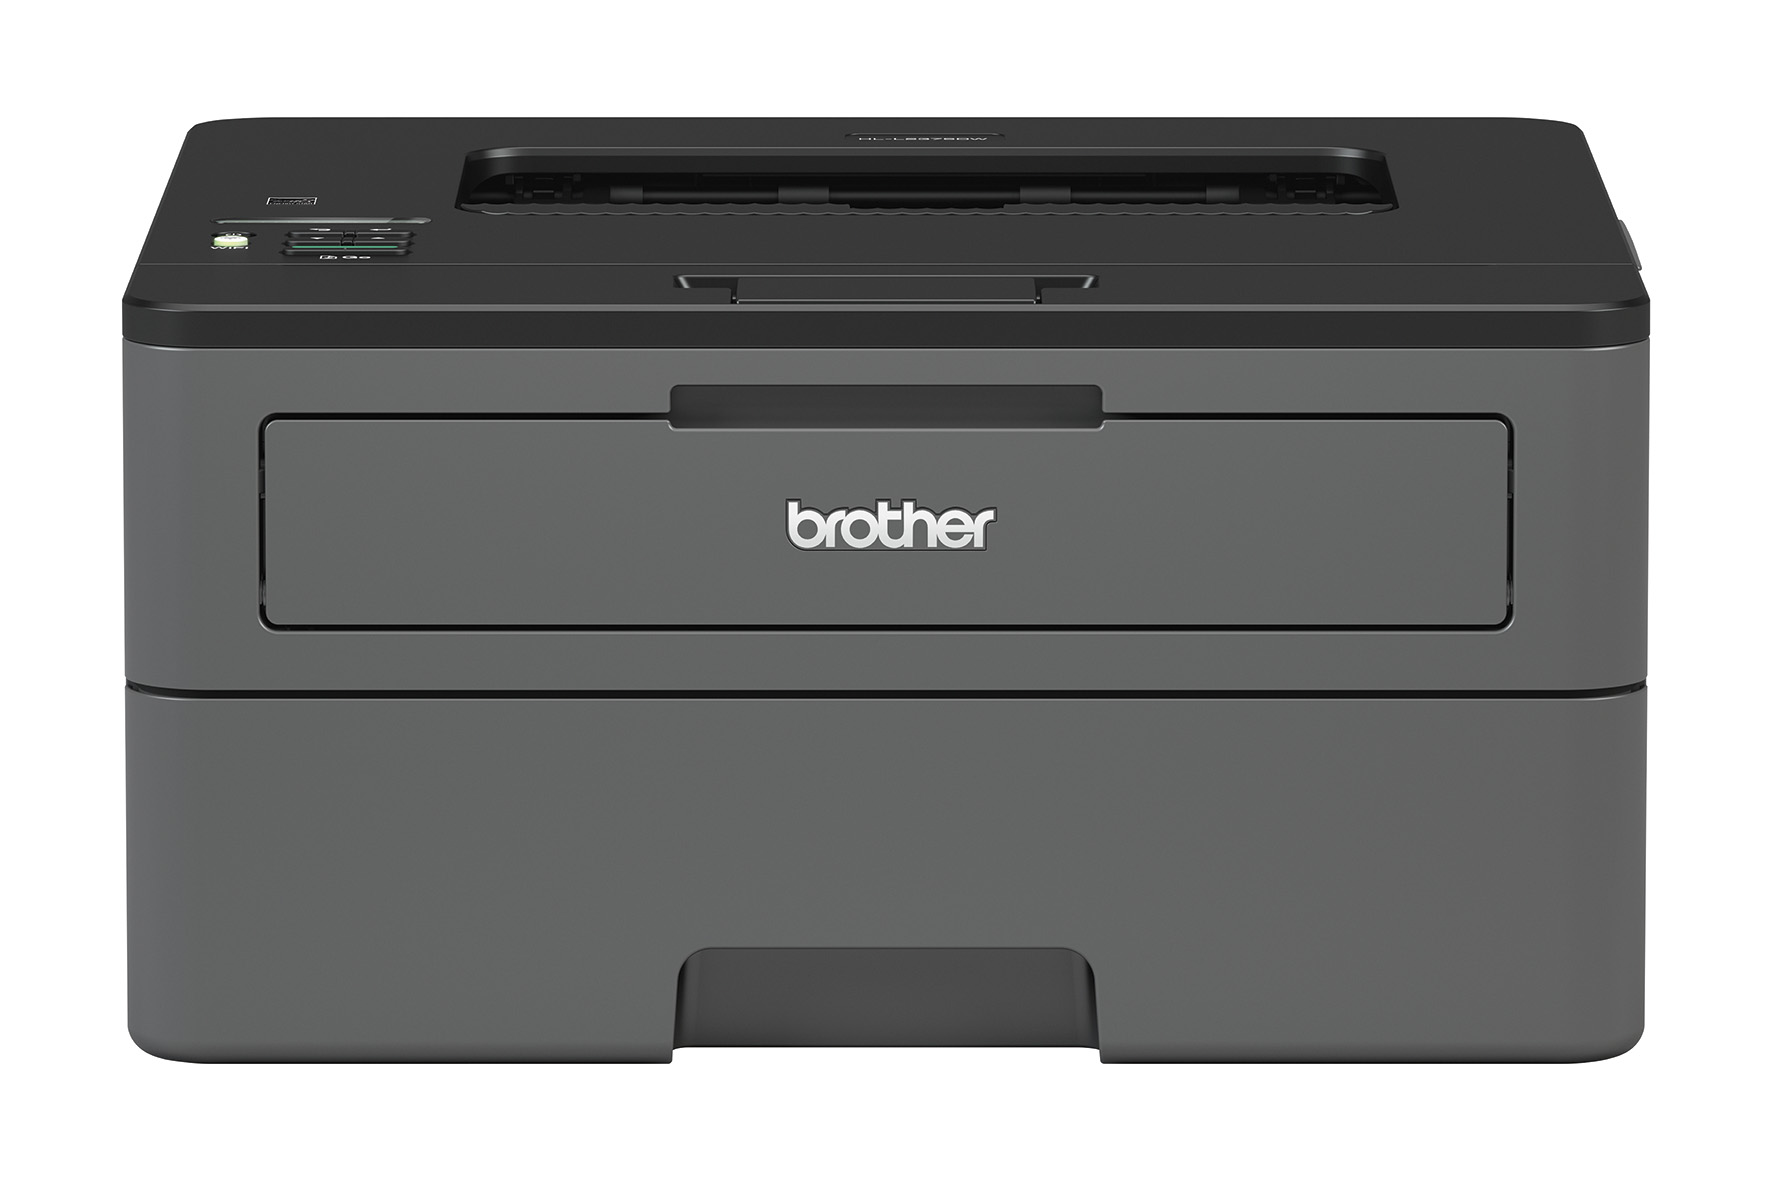 Brother Laserdrucker